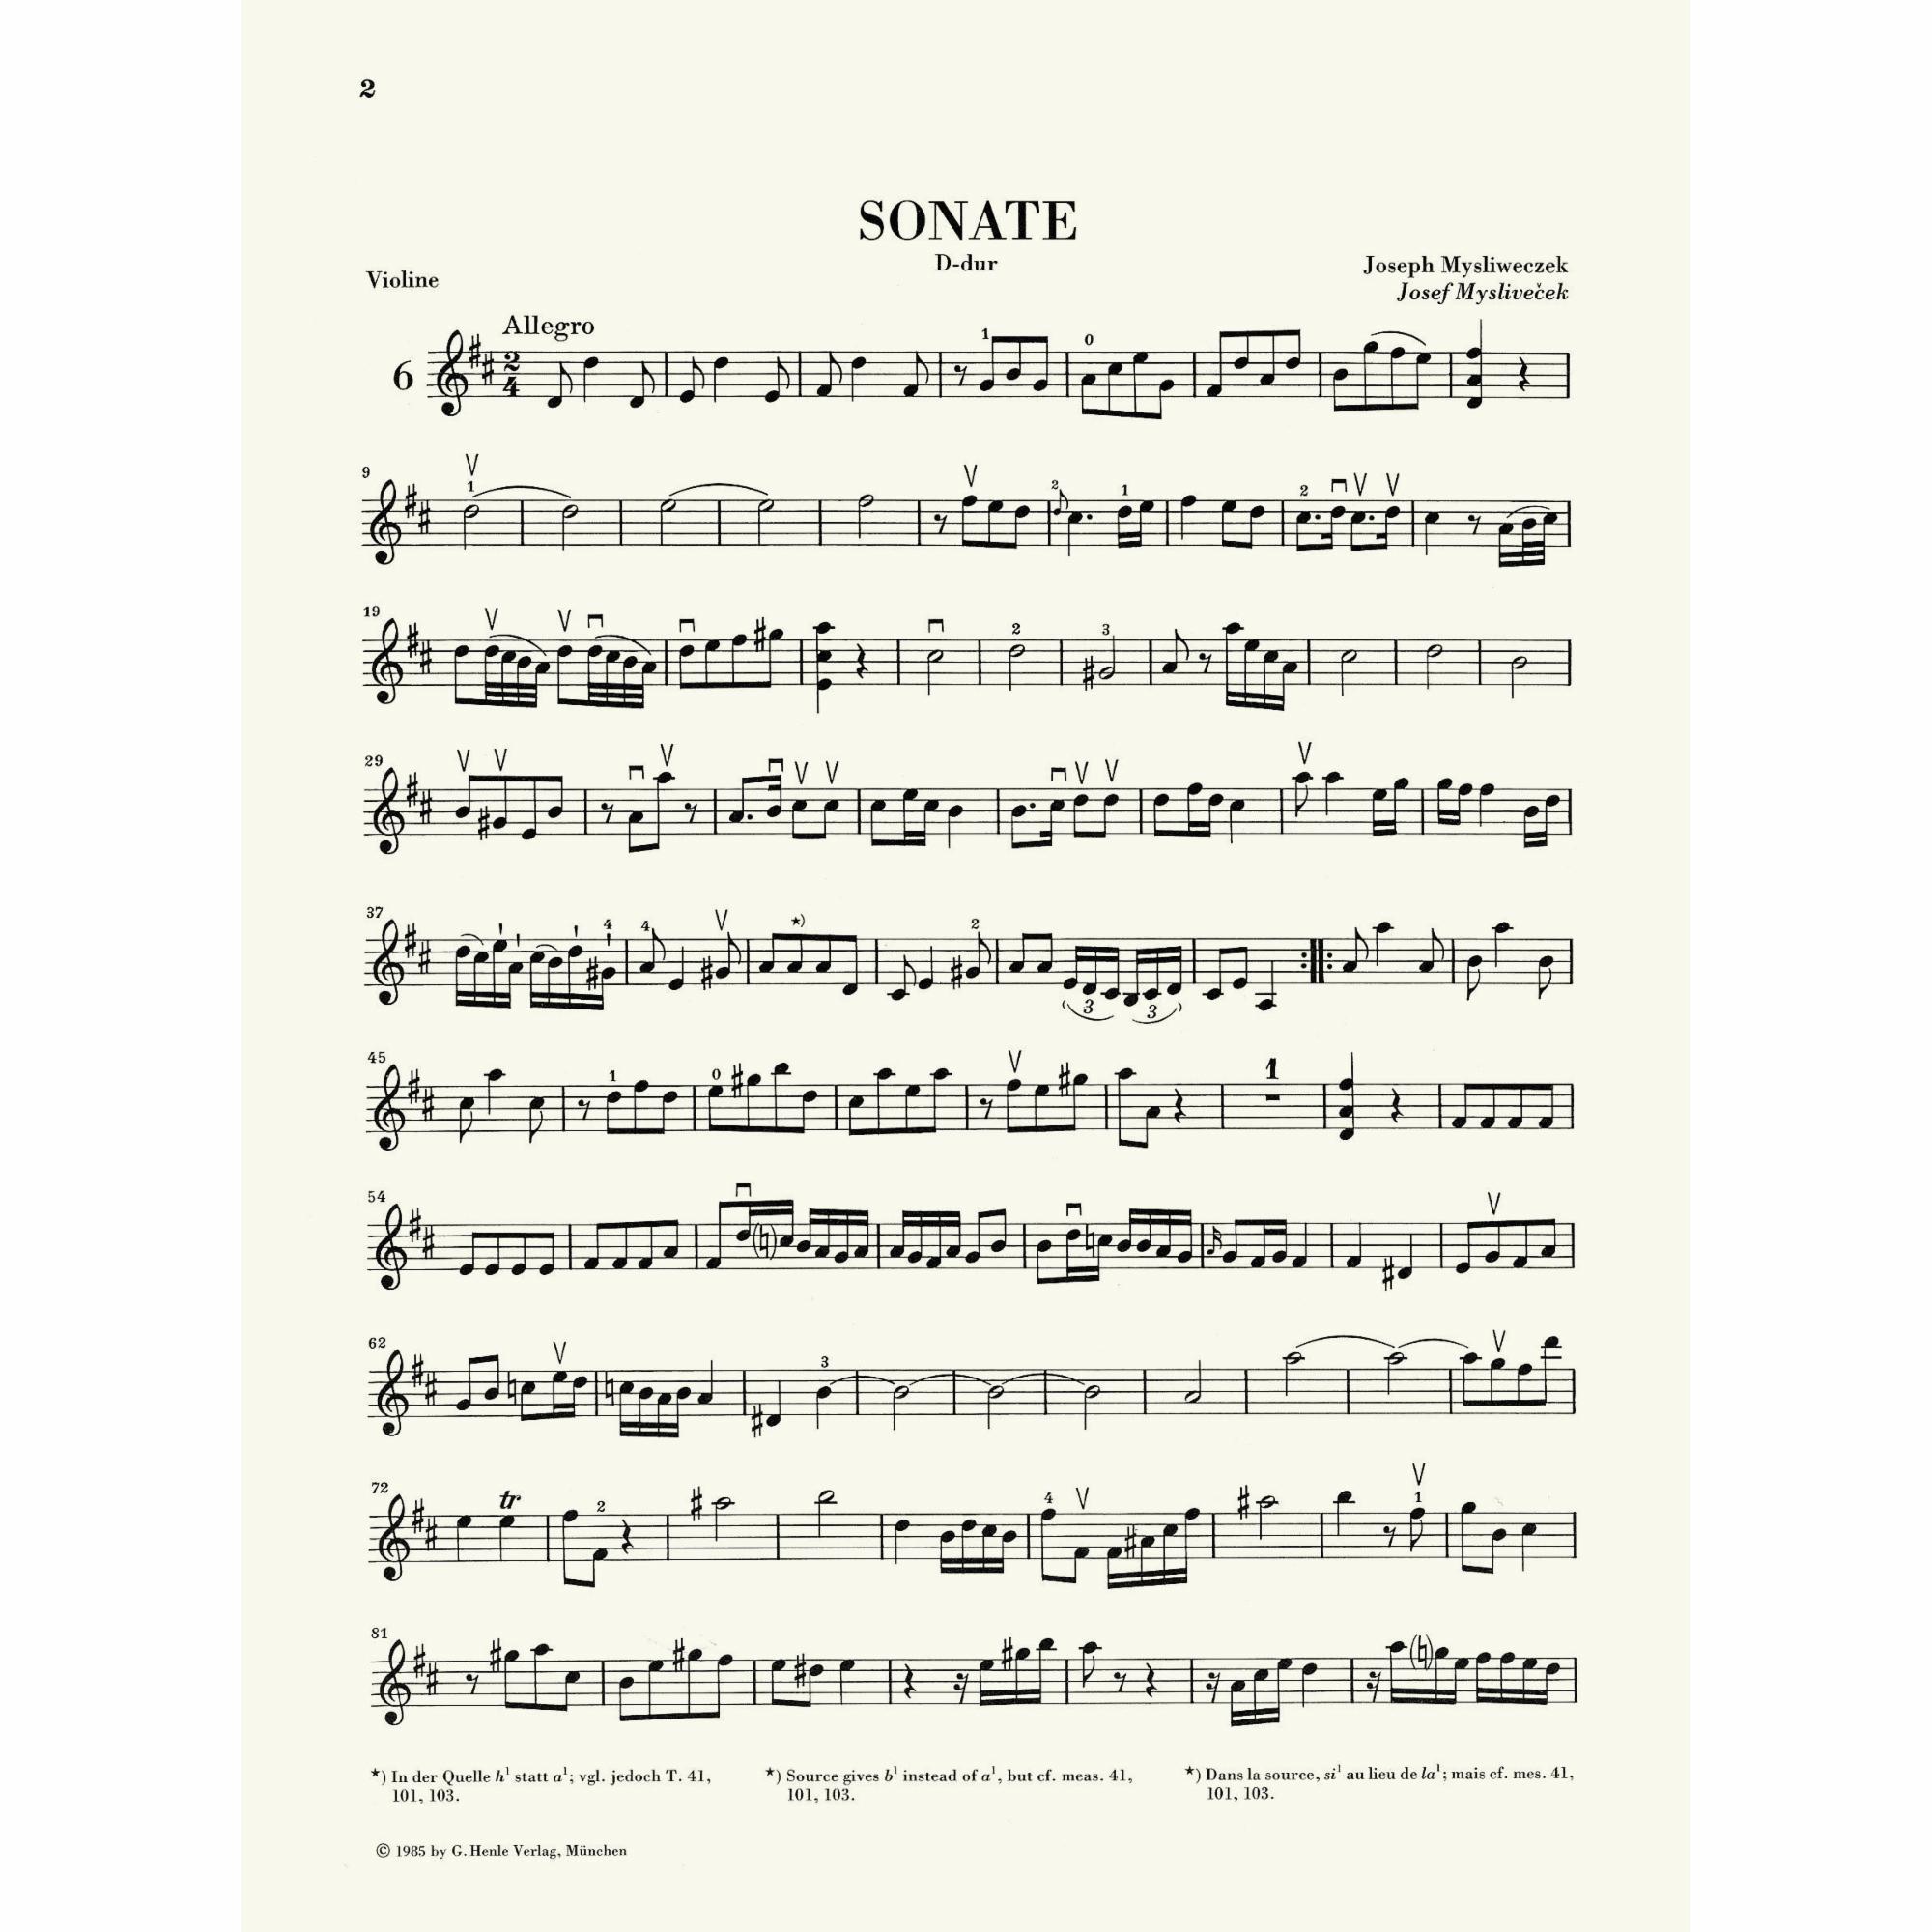 Sample: Vol. II, Violin (Pg. 2)